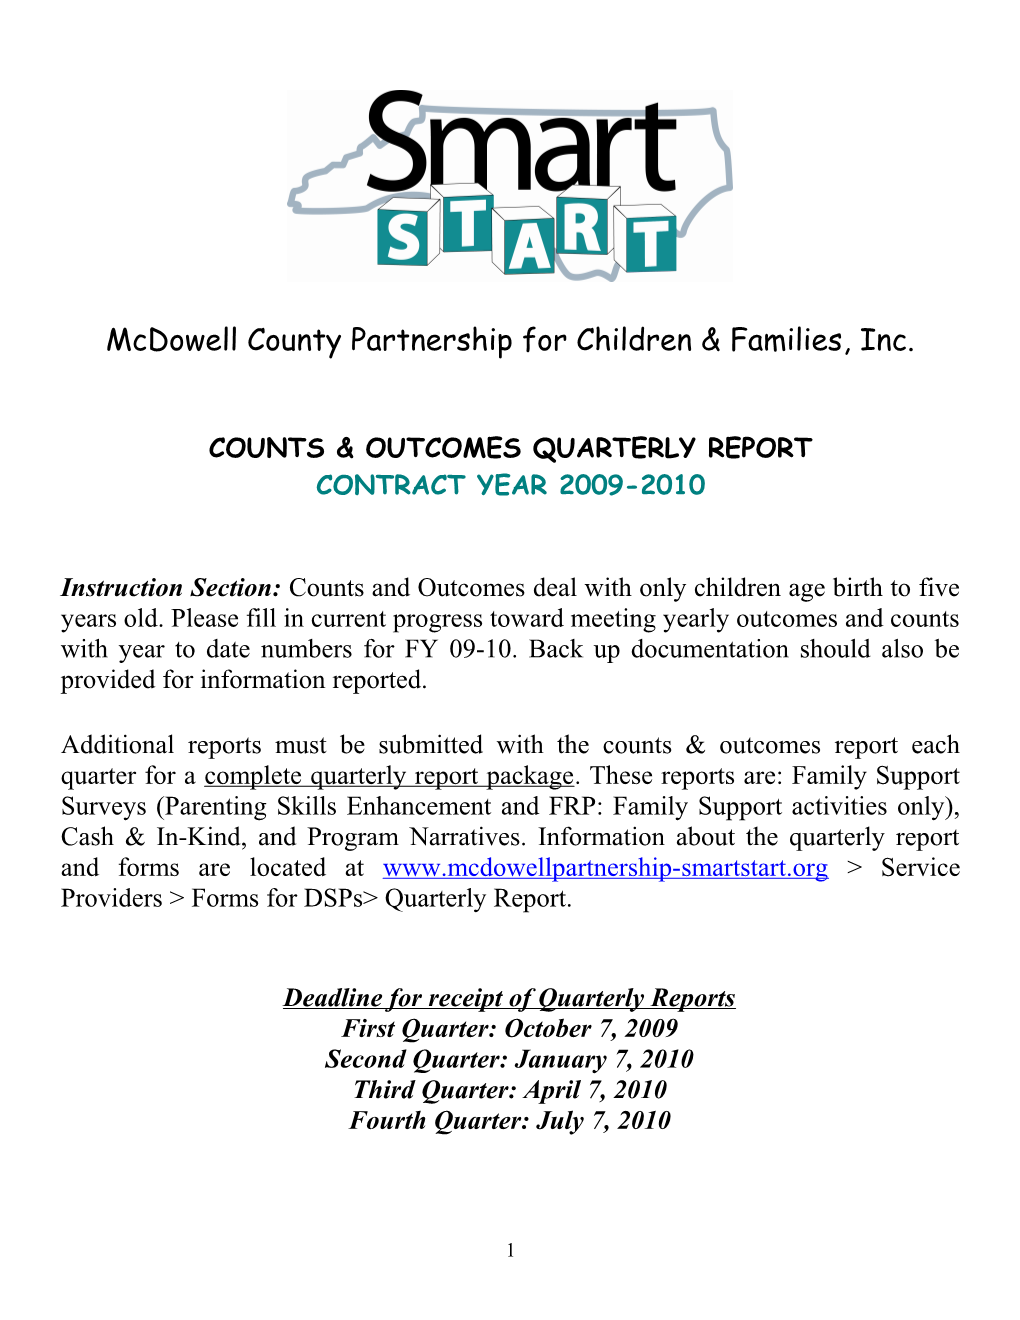 Mcdowellcounty Partnership for Children & Families, Inc